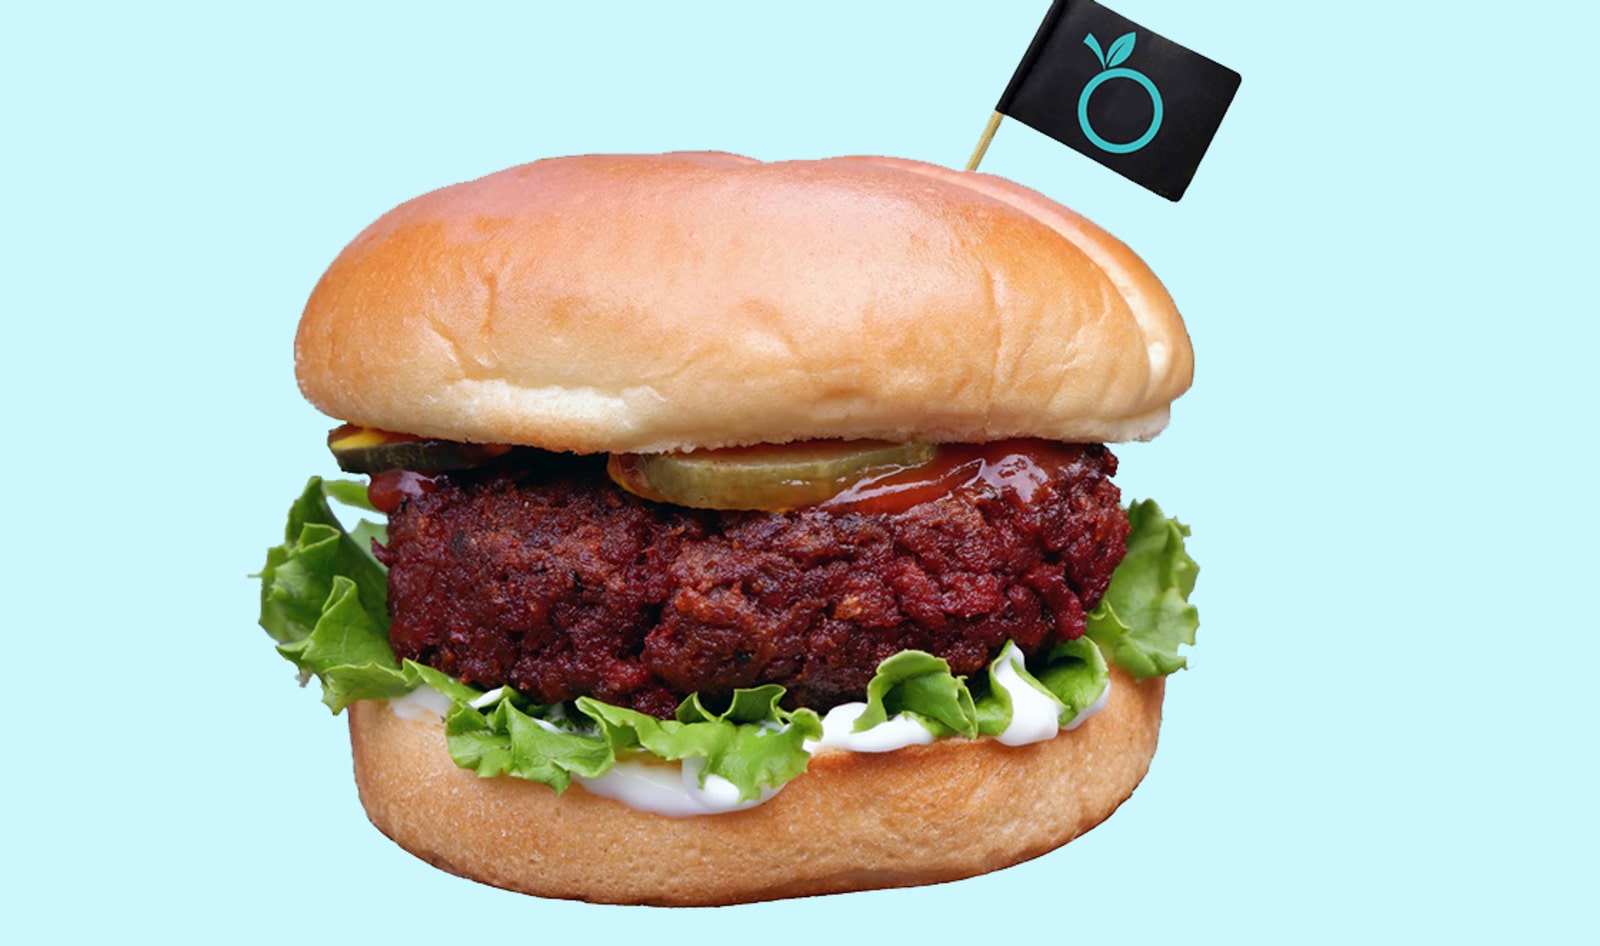 Canadian Fast-Food Chain Debuts Its Own Vegan “Bleeding” Burger